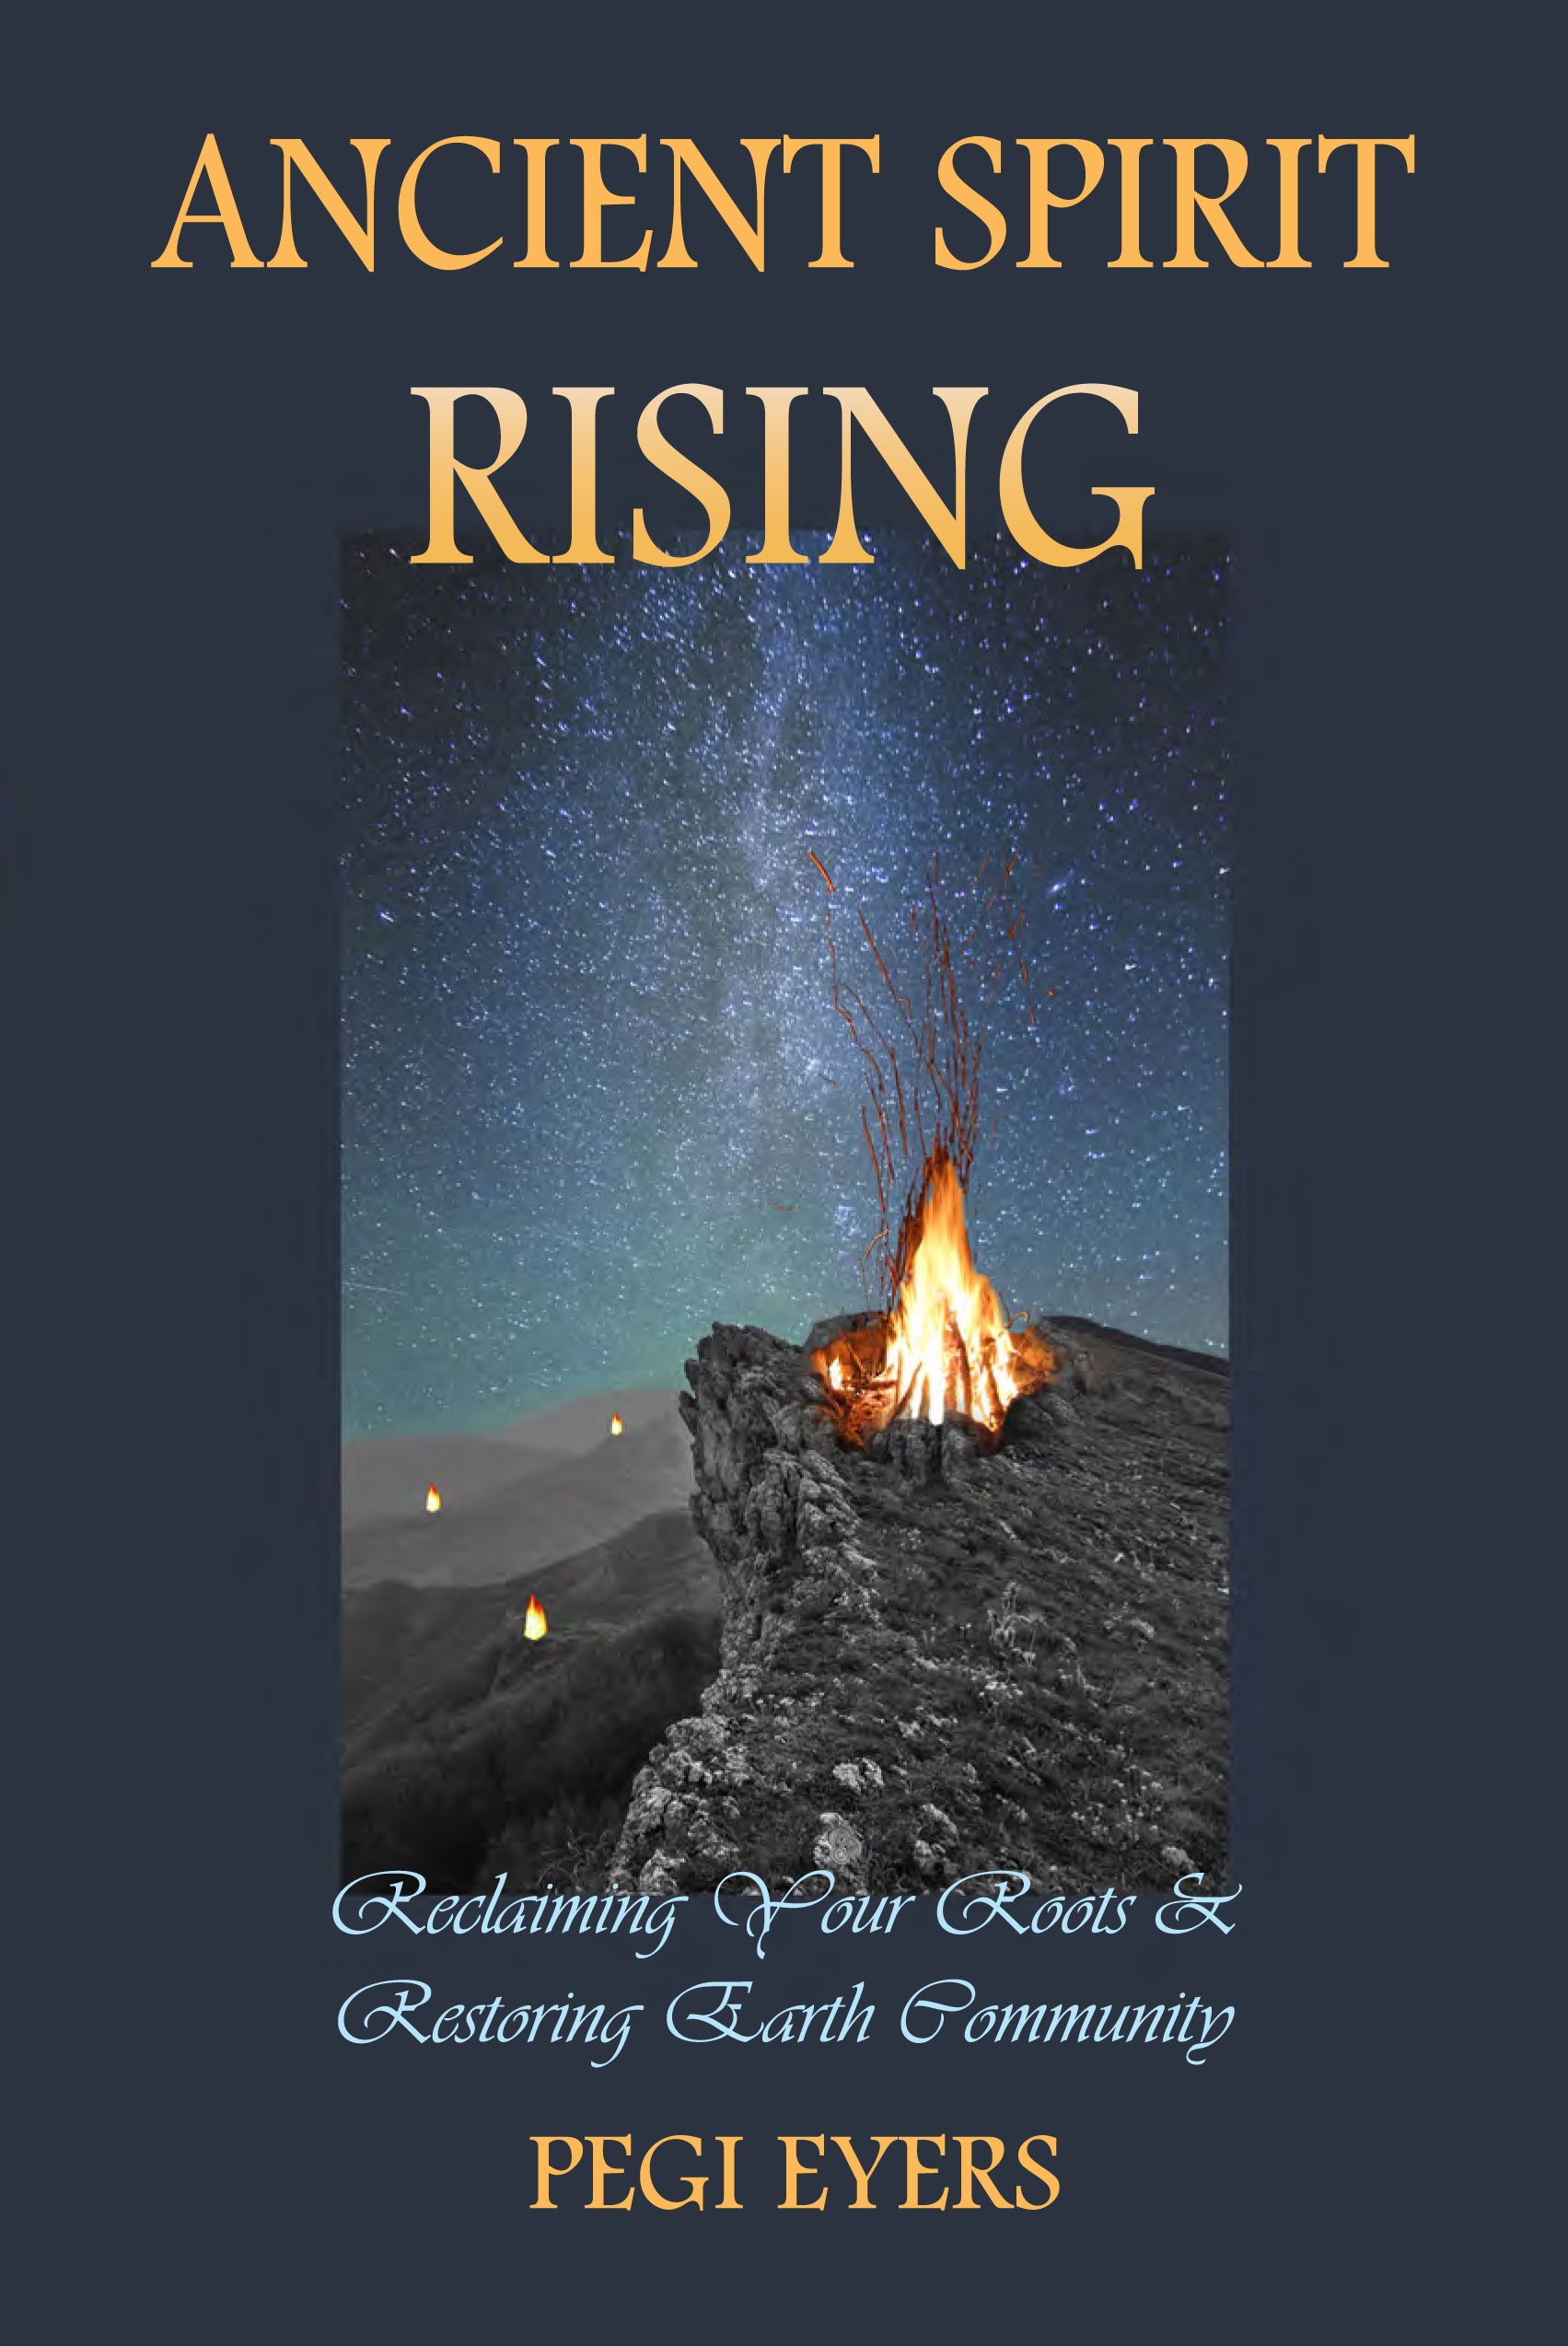 Ancient spirits. Ancient Spirit. Spirit Rising. Ancient Spirit Rising Domine. Domine 2007 - Ancient Spirit Rising.